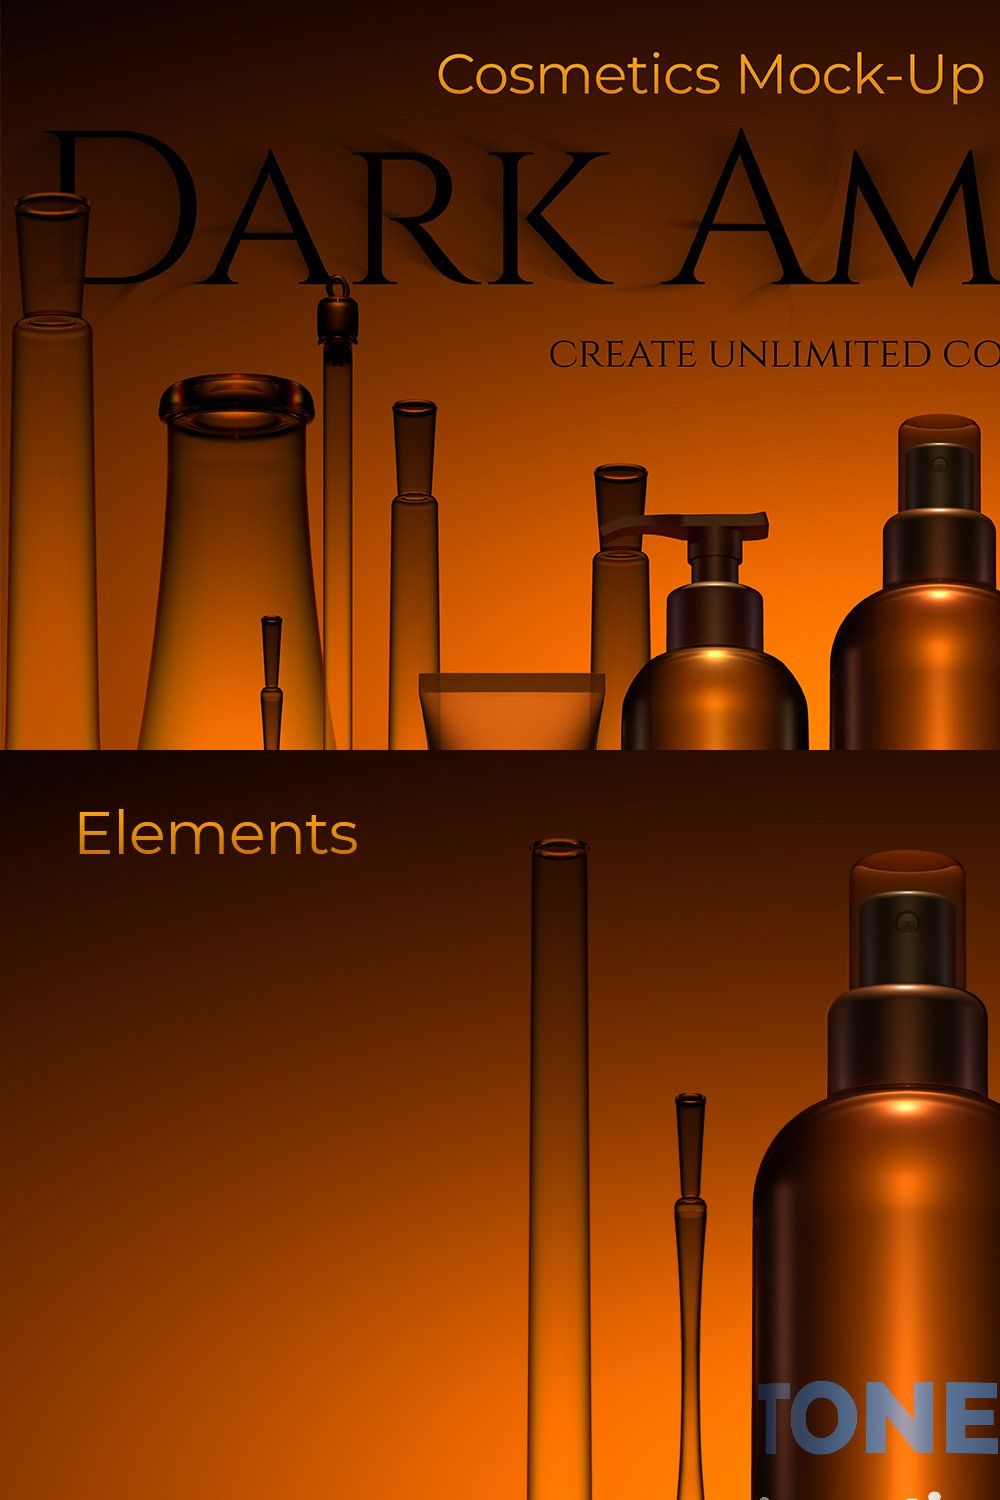 Dark Amber Cosmetics Scene Creator pinterest preview image.